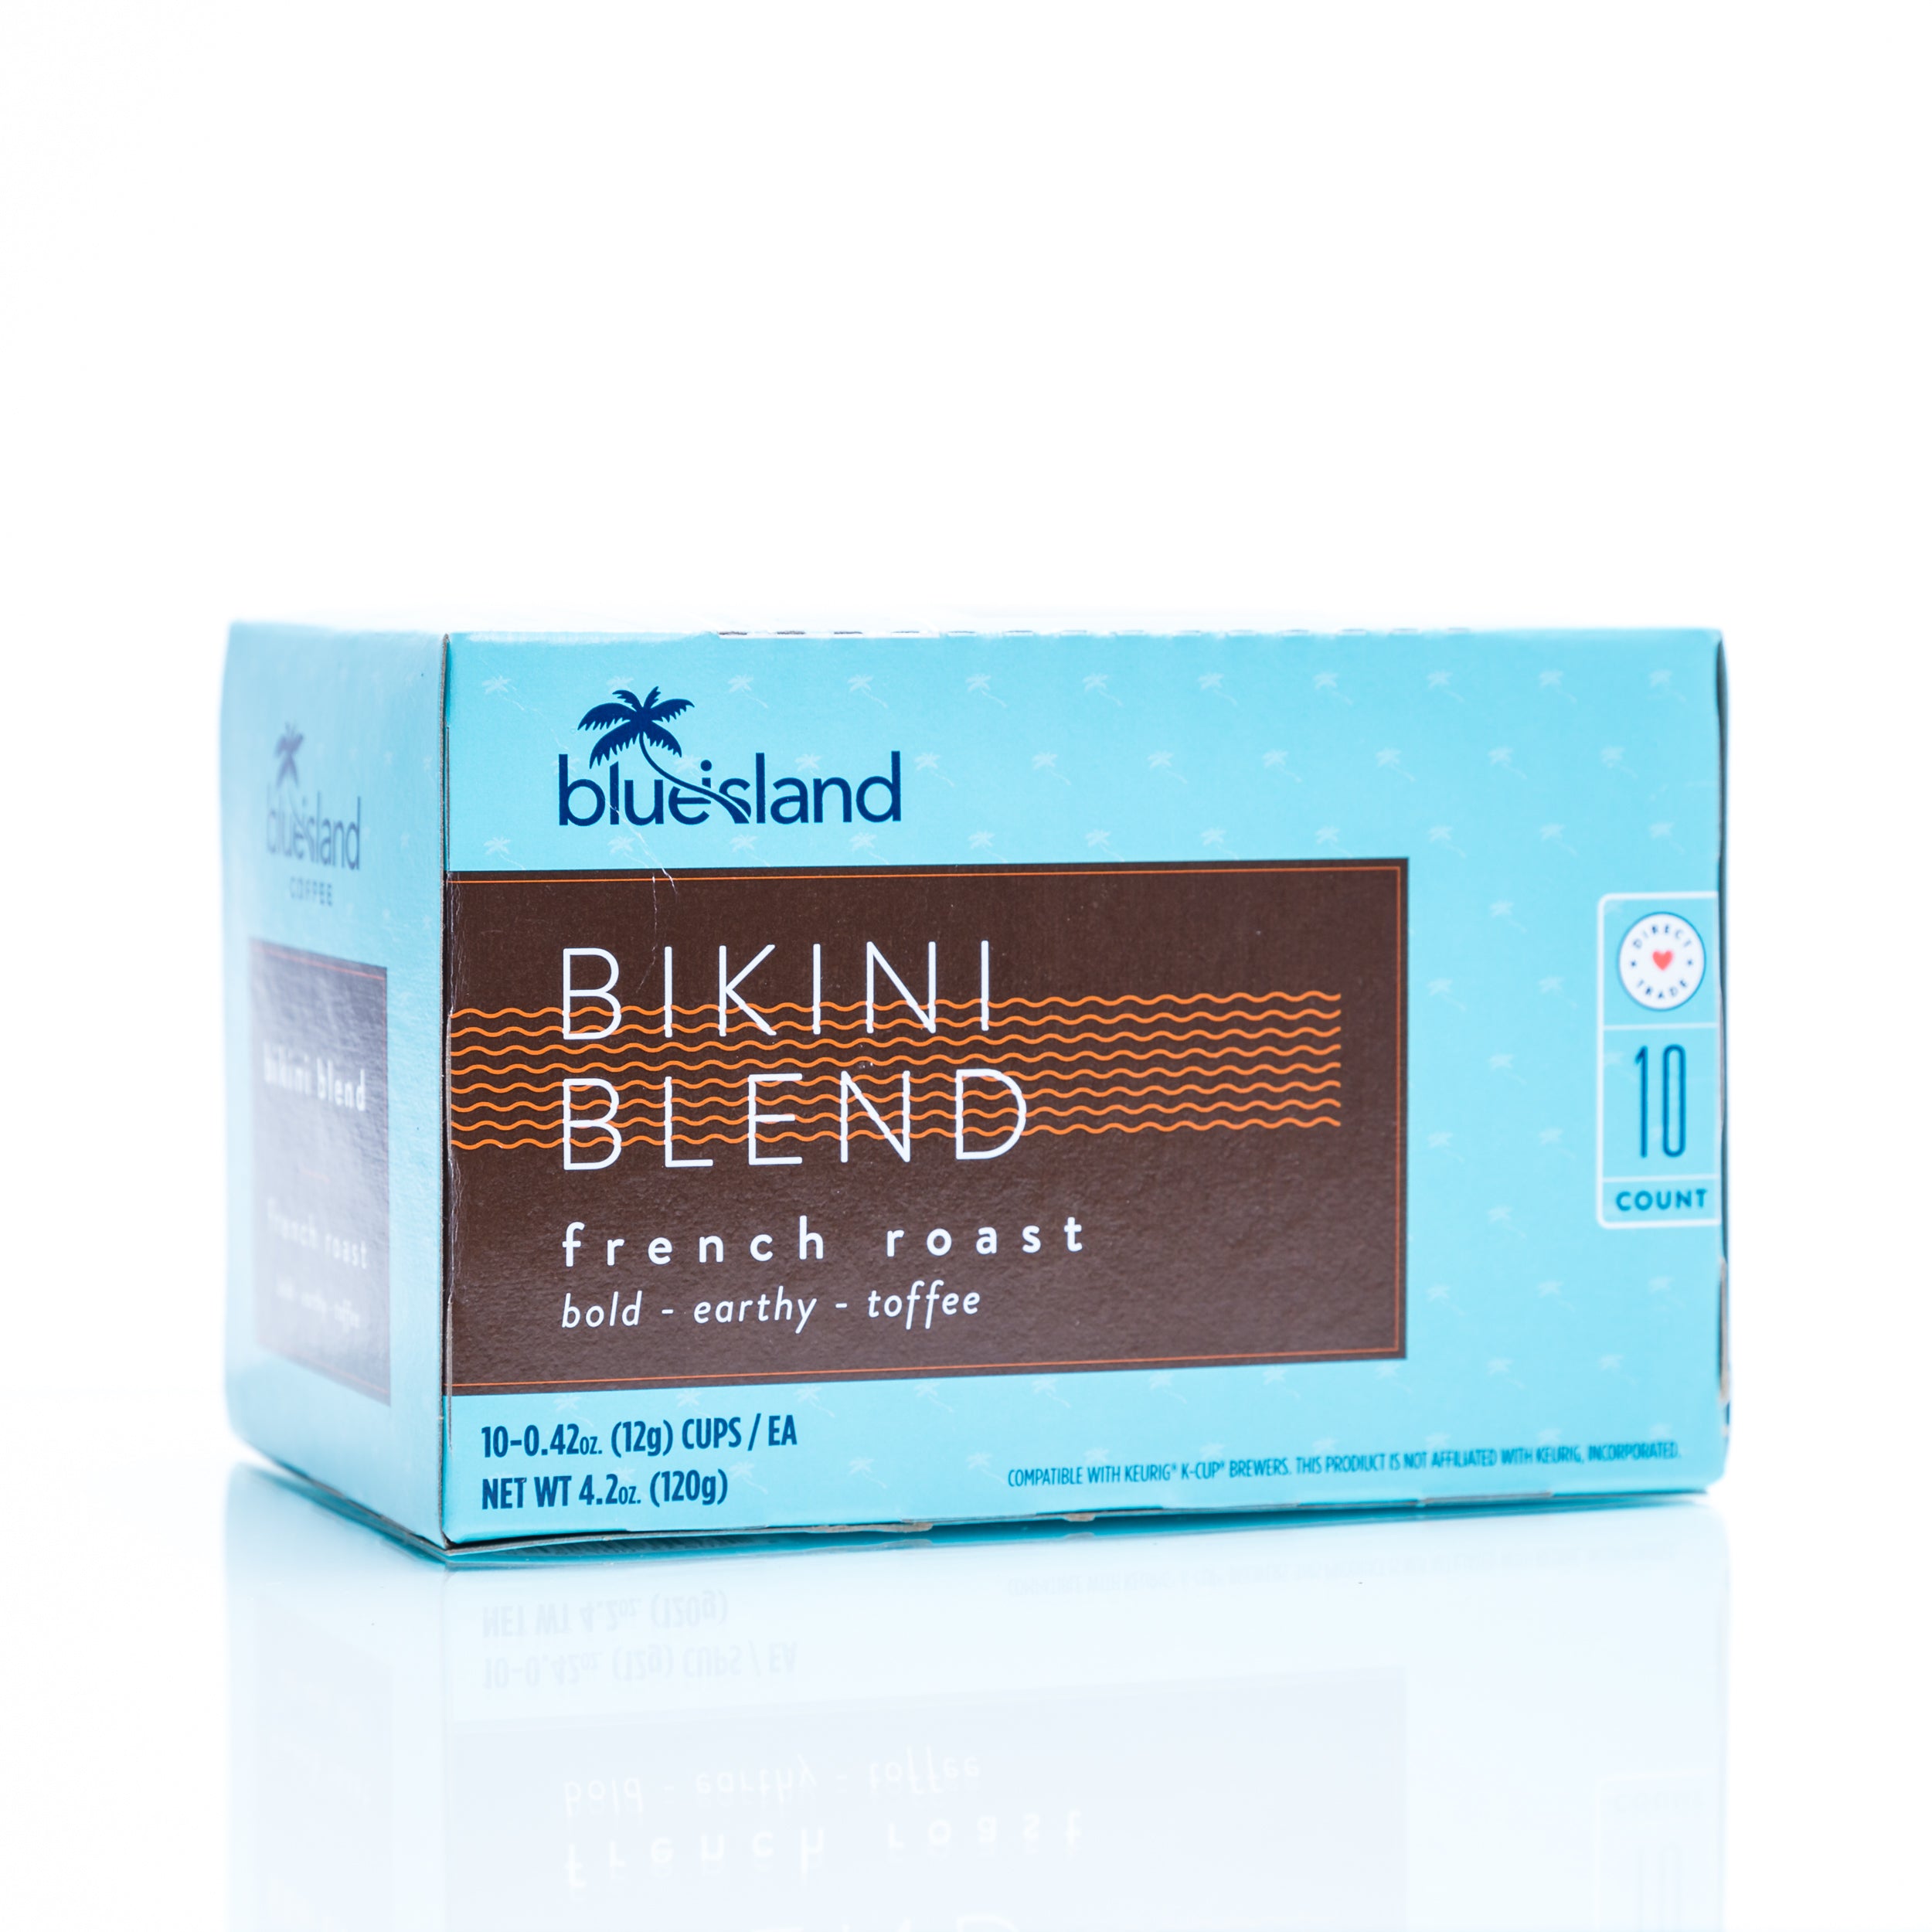 BULK BUY: Bikini Blend Recyclable K-Cups (60 K-Cups) - Blue Island Coffee